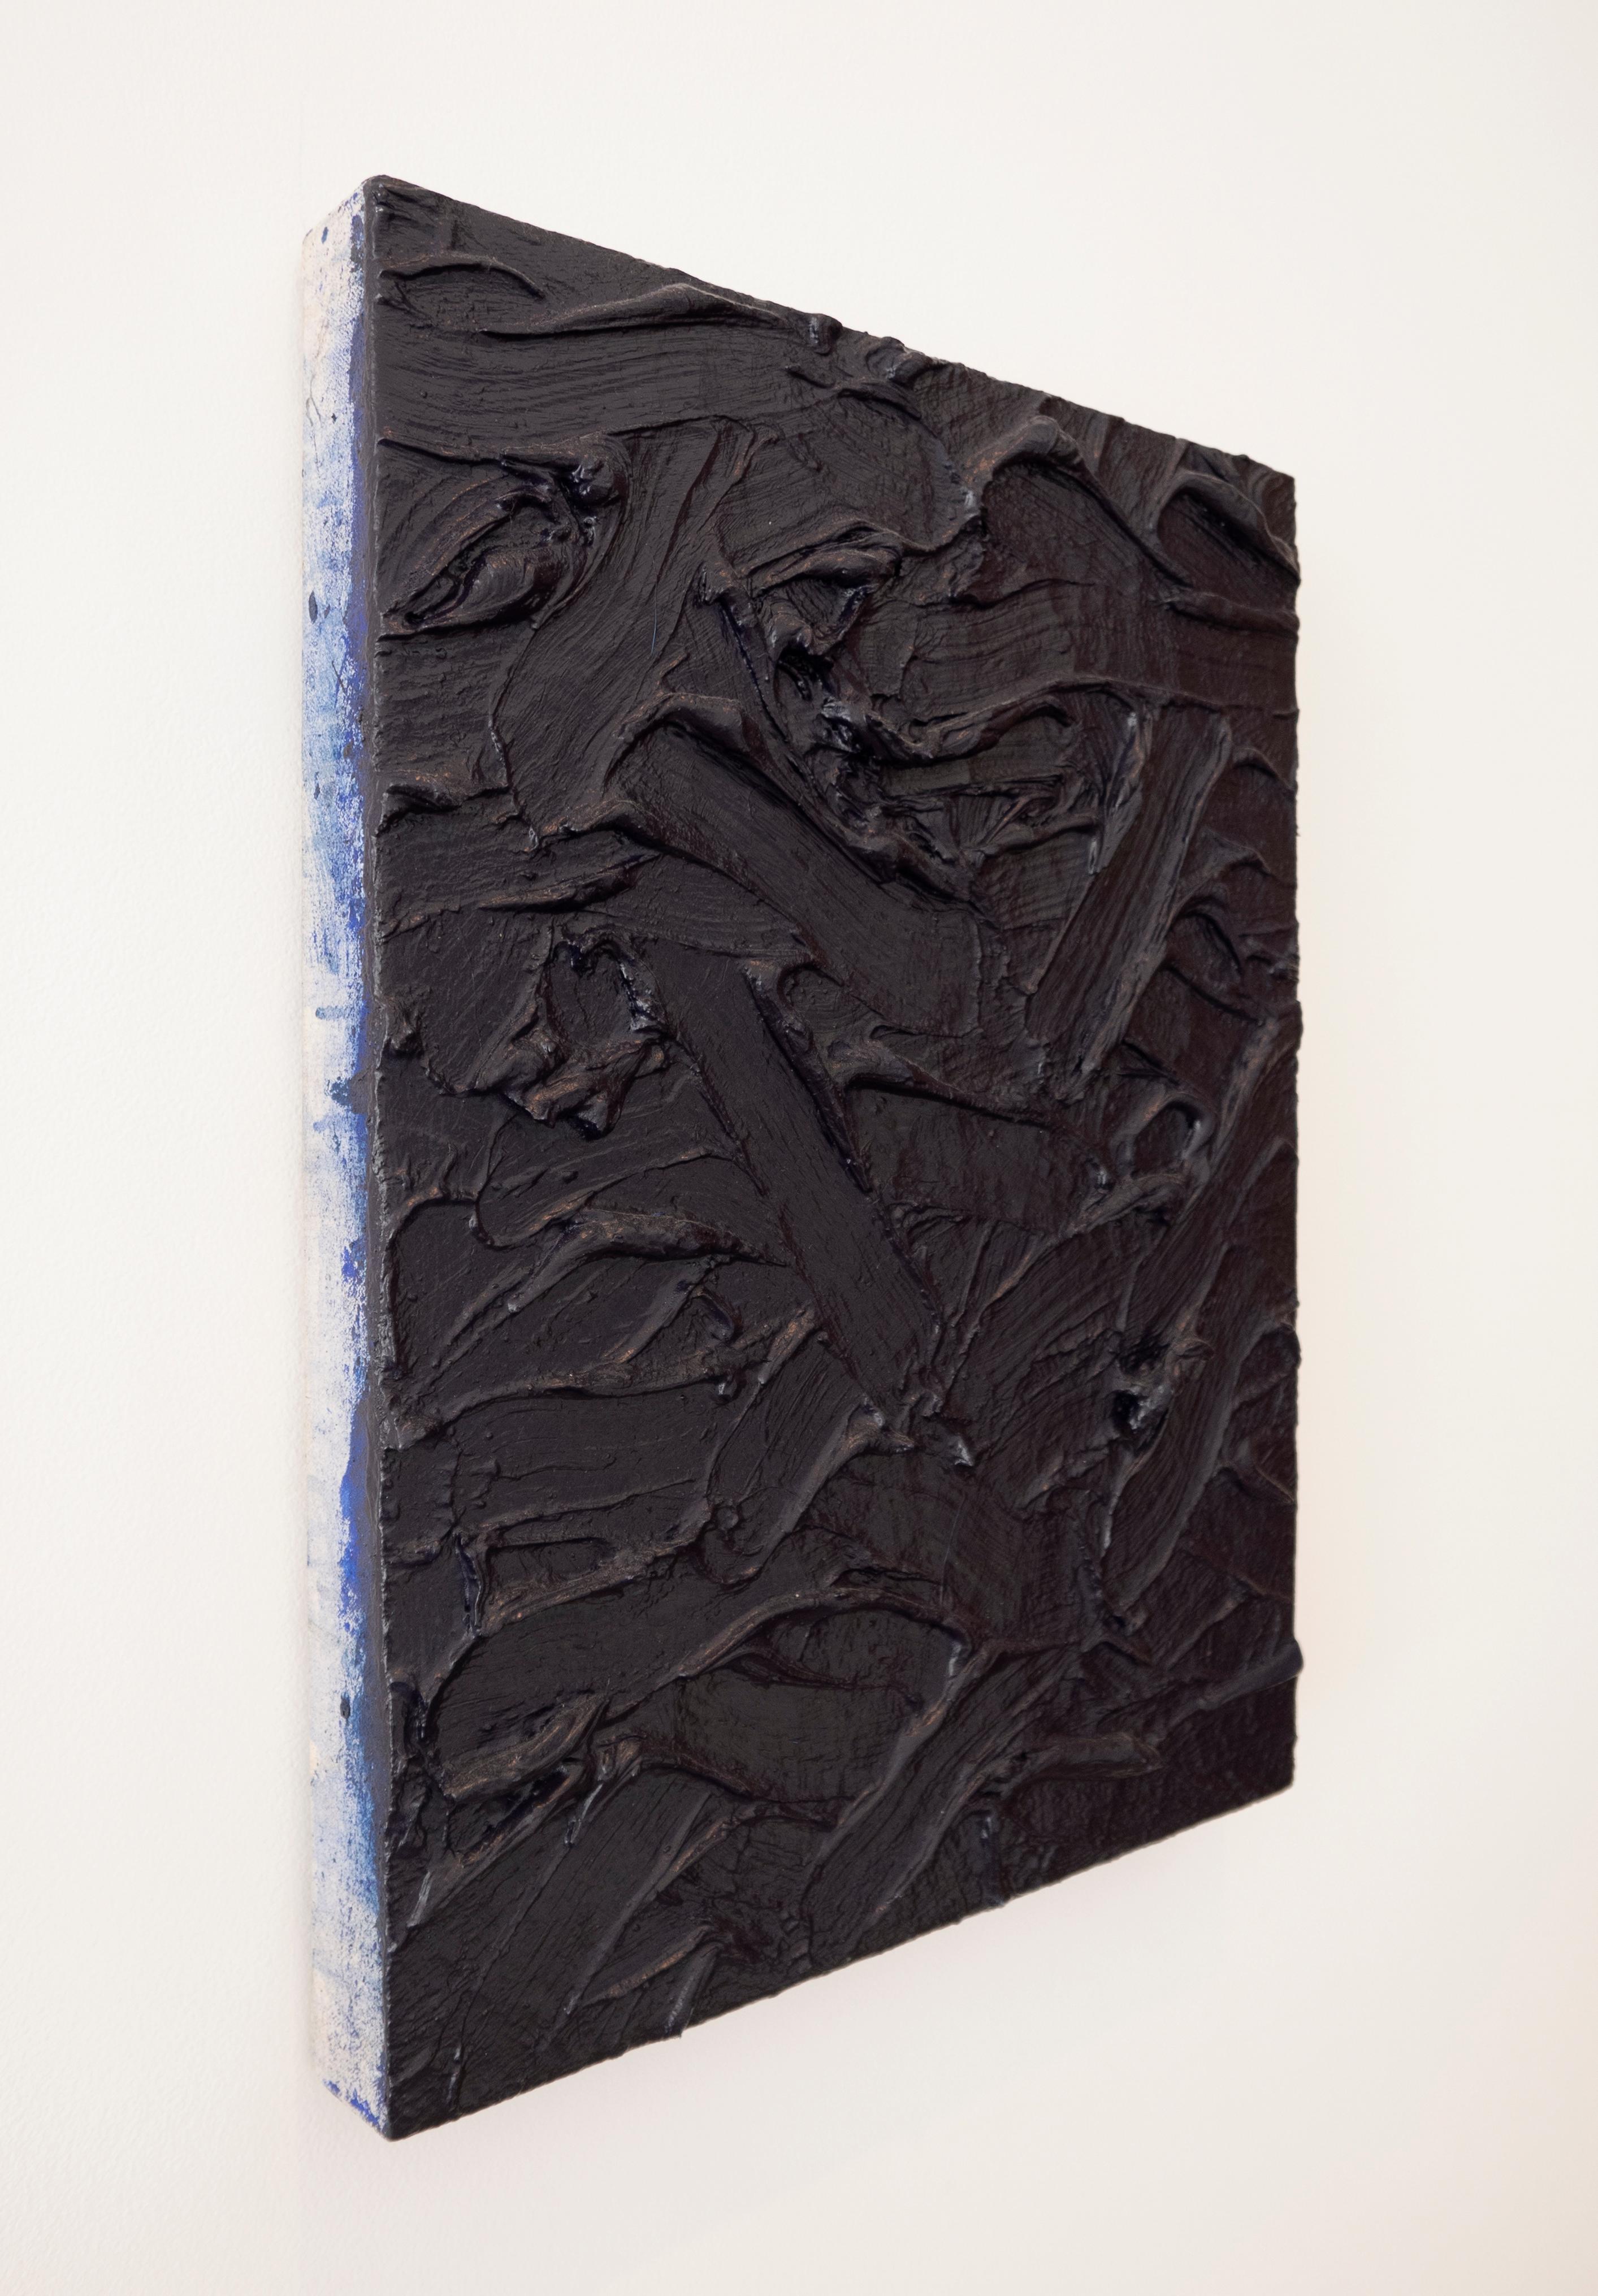 Abstract #4 - Black Abstract Painting by James Hayward